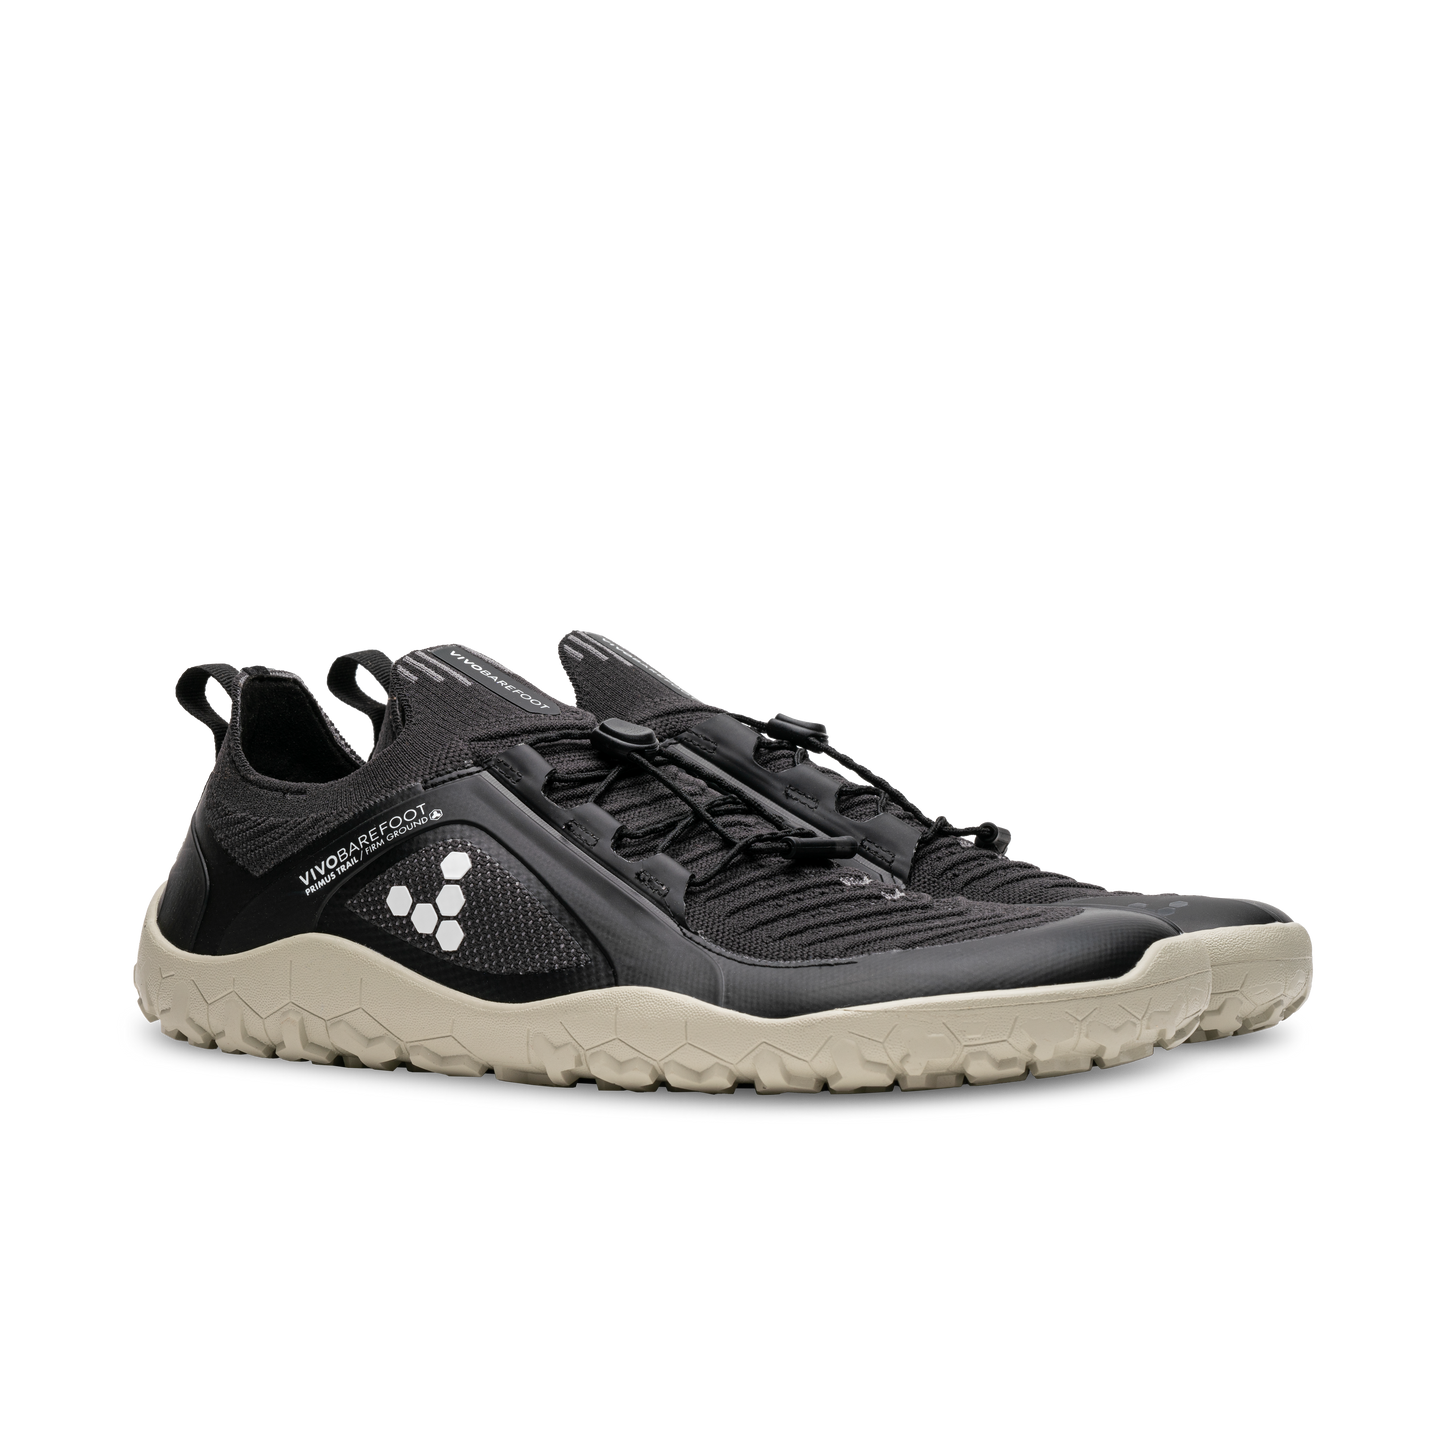 Vivobarefoot Primus Trail Knit FG Mens i Obsidian / Limestone, barfodsvenlige sko designet til terrænløb med åndbar mesh overdel og skridsikker sål